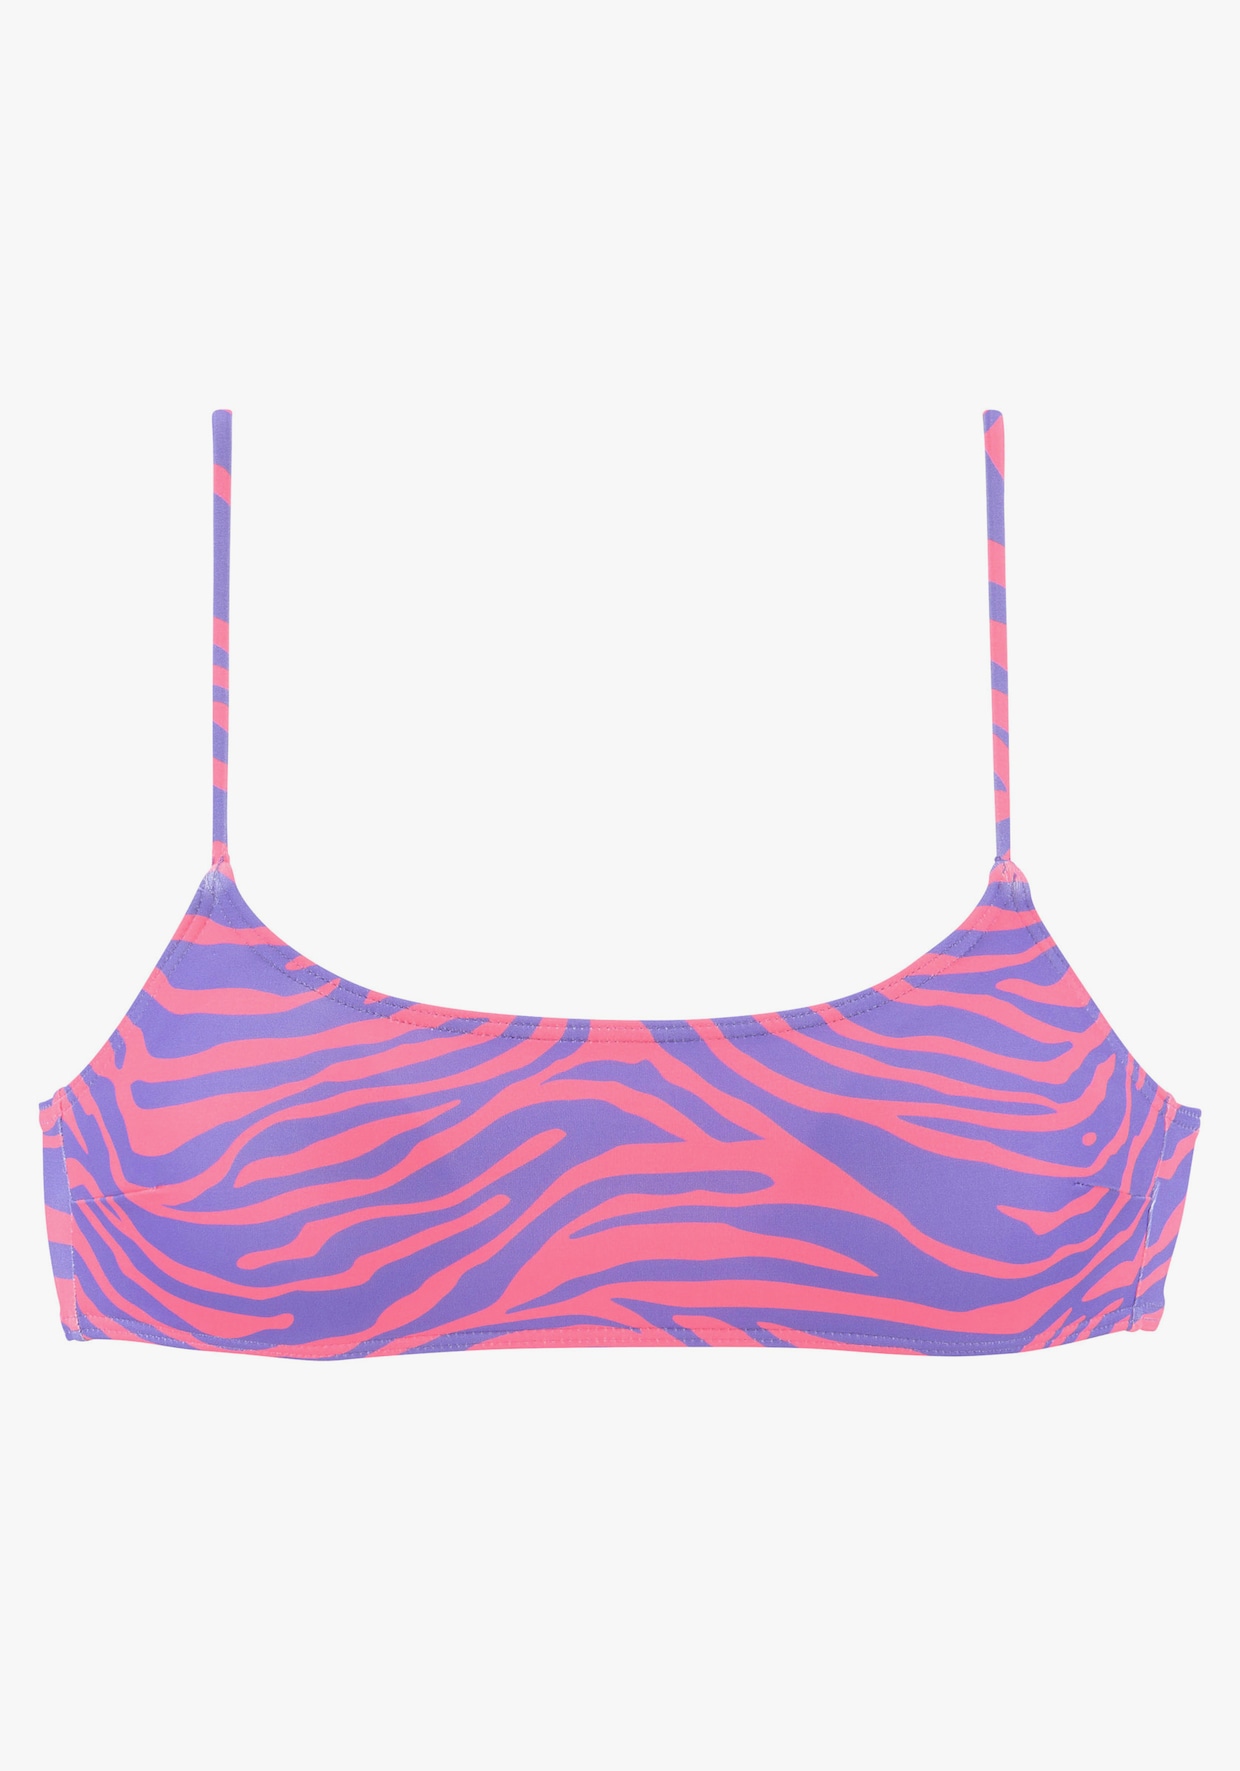 Venice Beach haut de bikini bustier - violet-corail